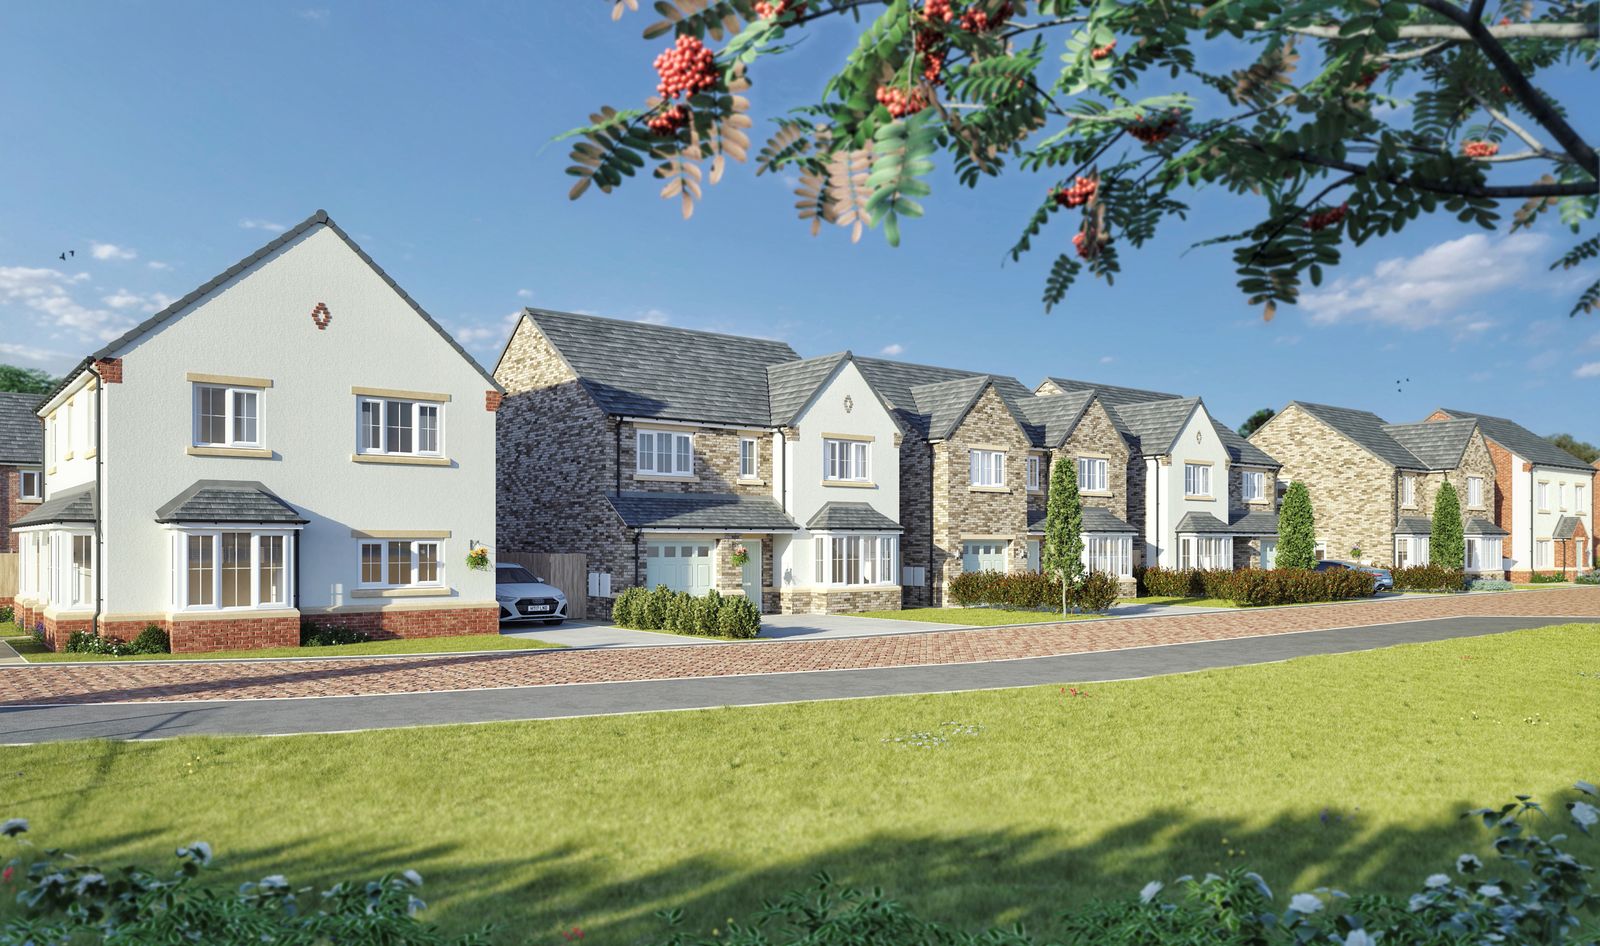 Stonebridge Homes launches £10,000 Wakefield community fund